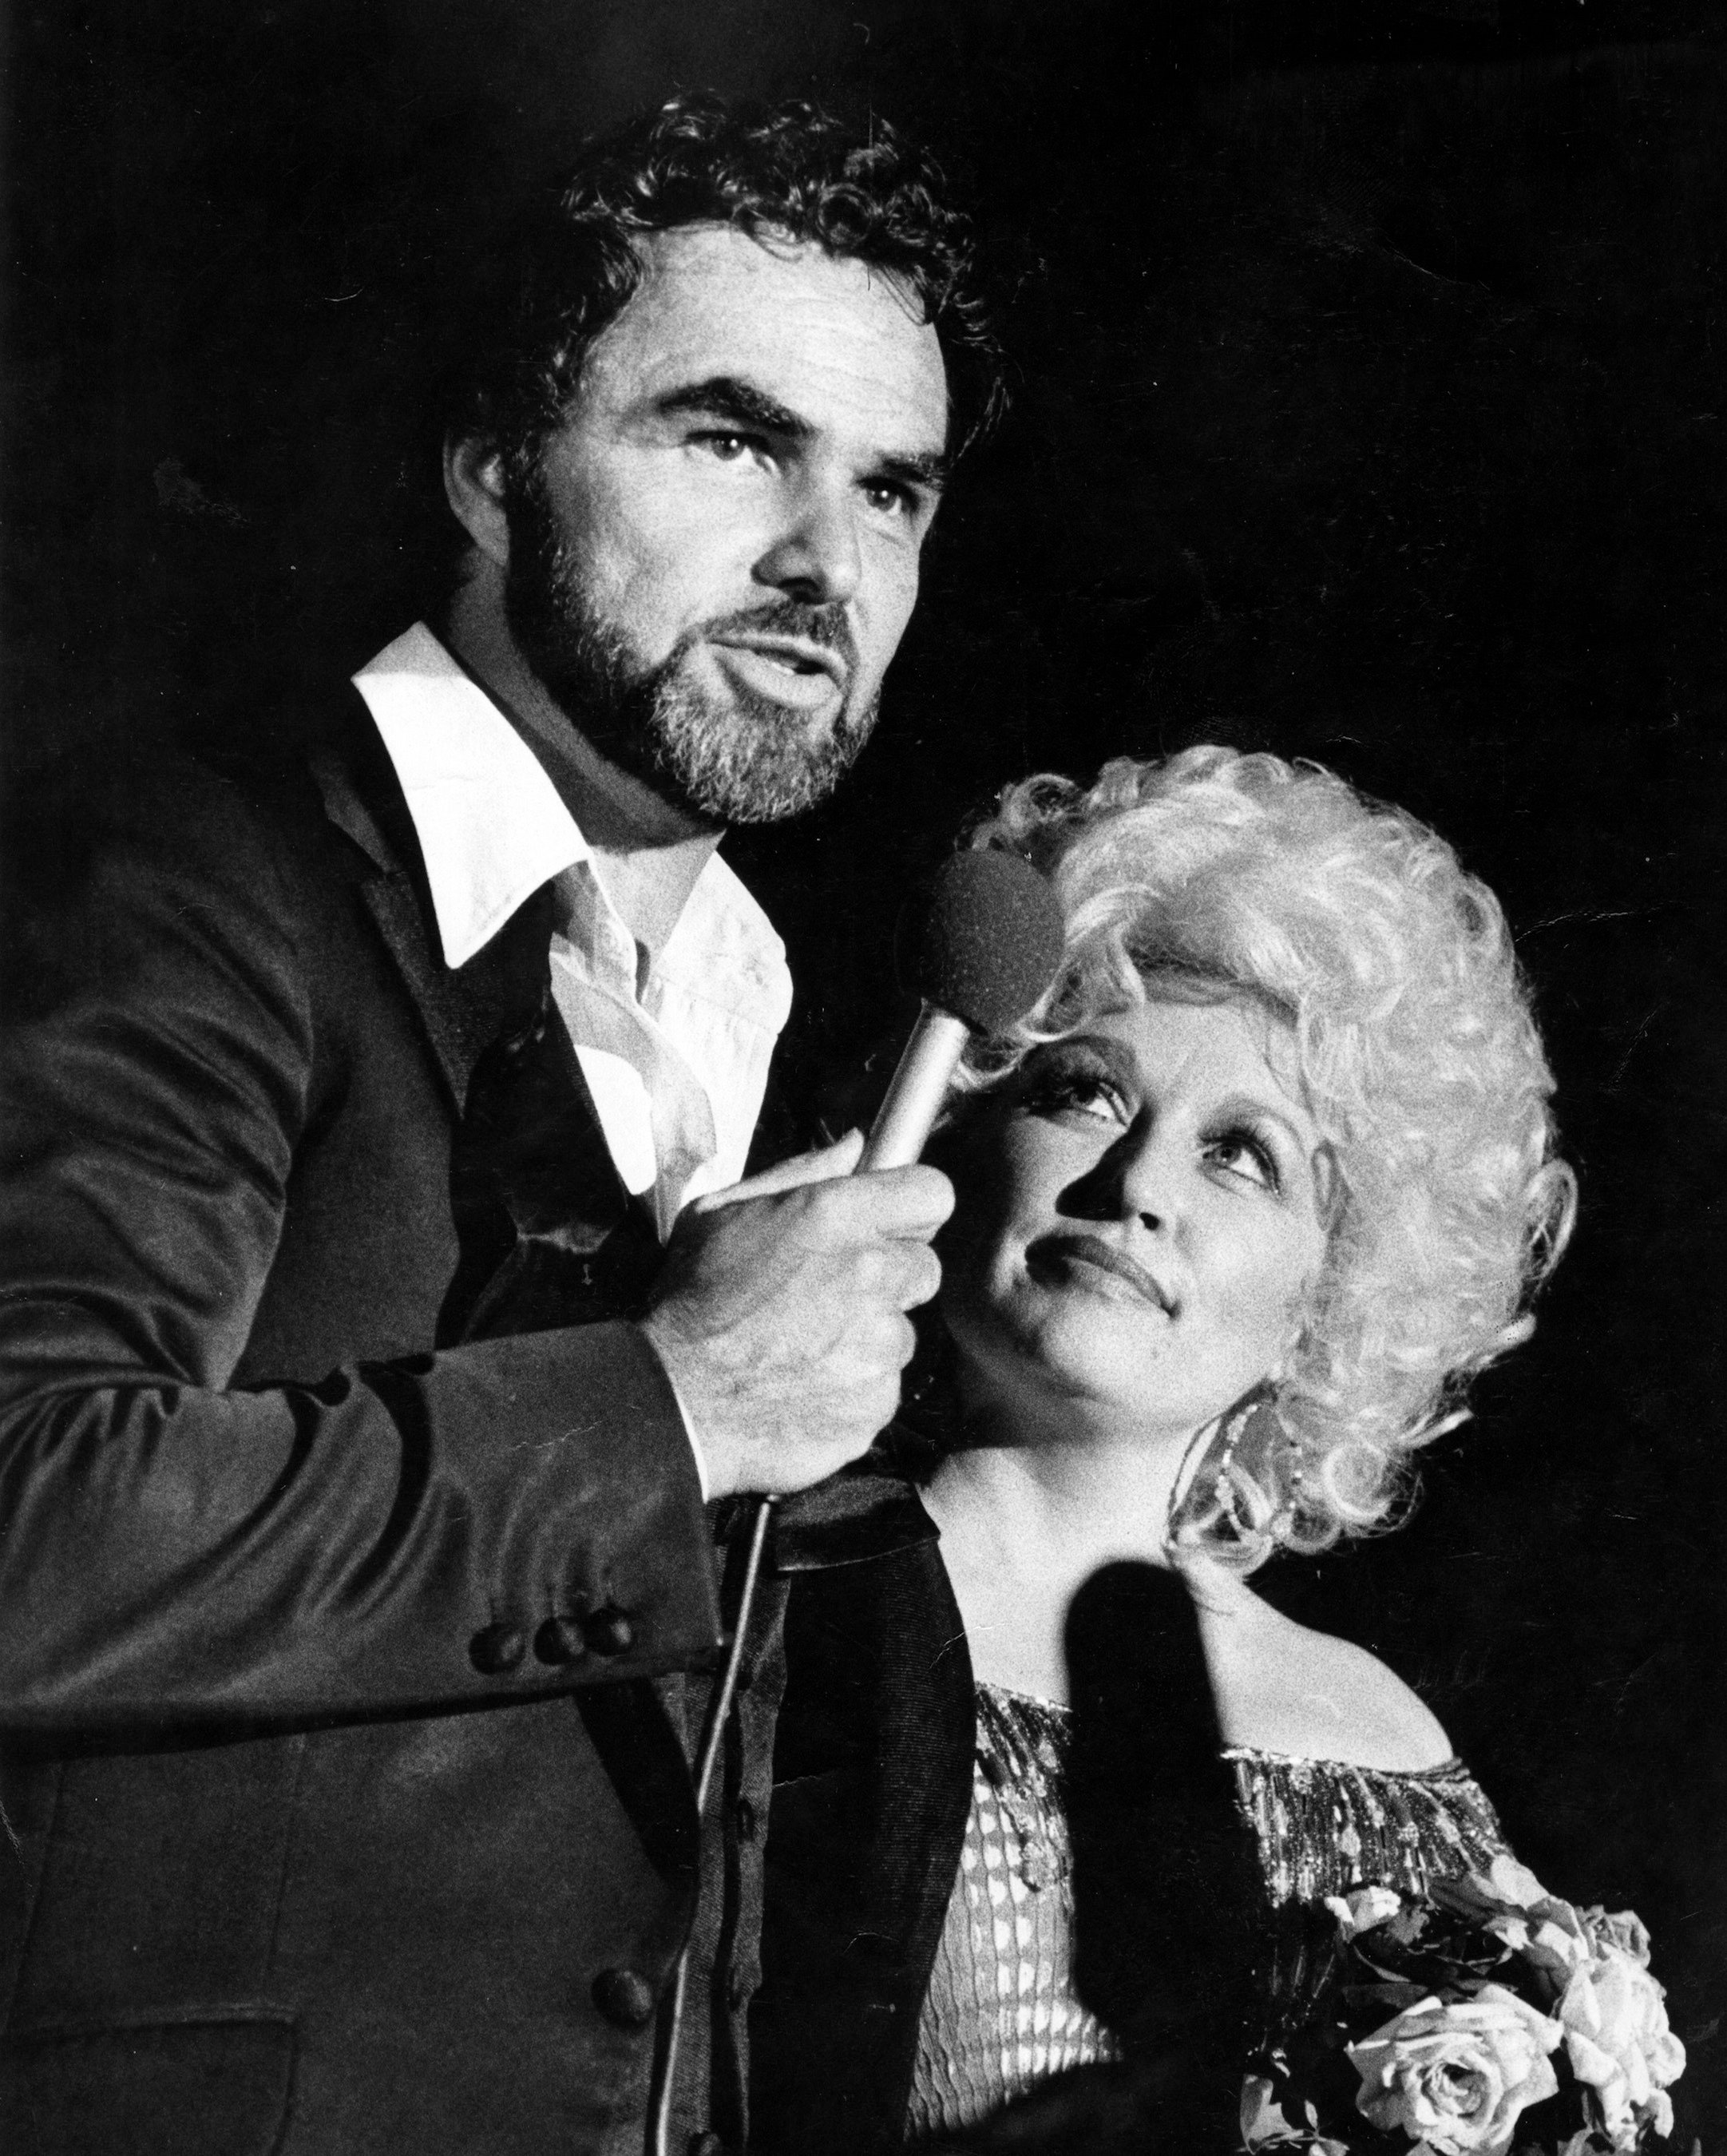 Burt Reynolds and Dolly Parton at Burt Reynolds Theater on July 15, 1982 